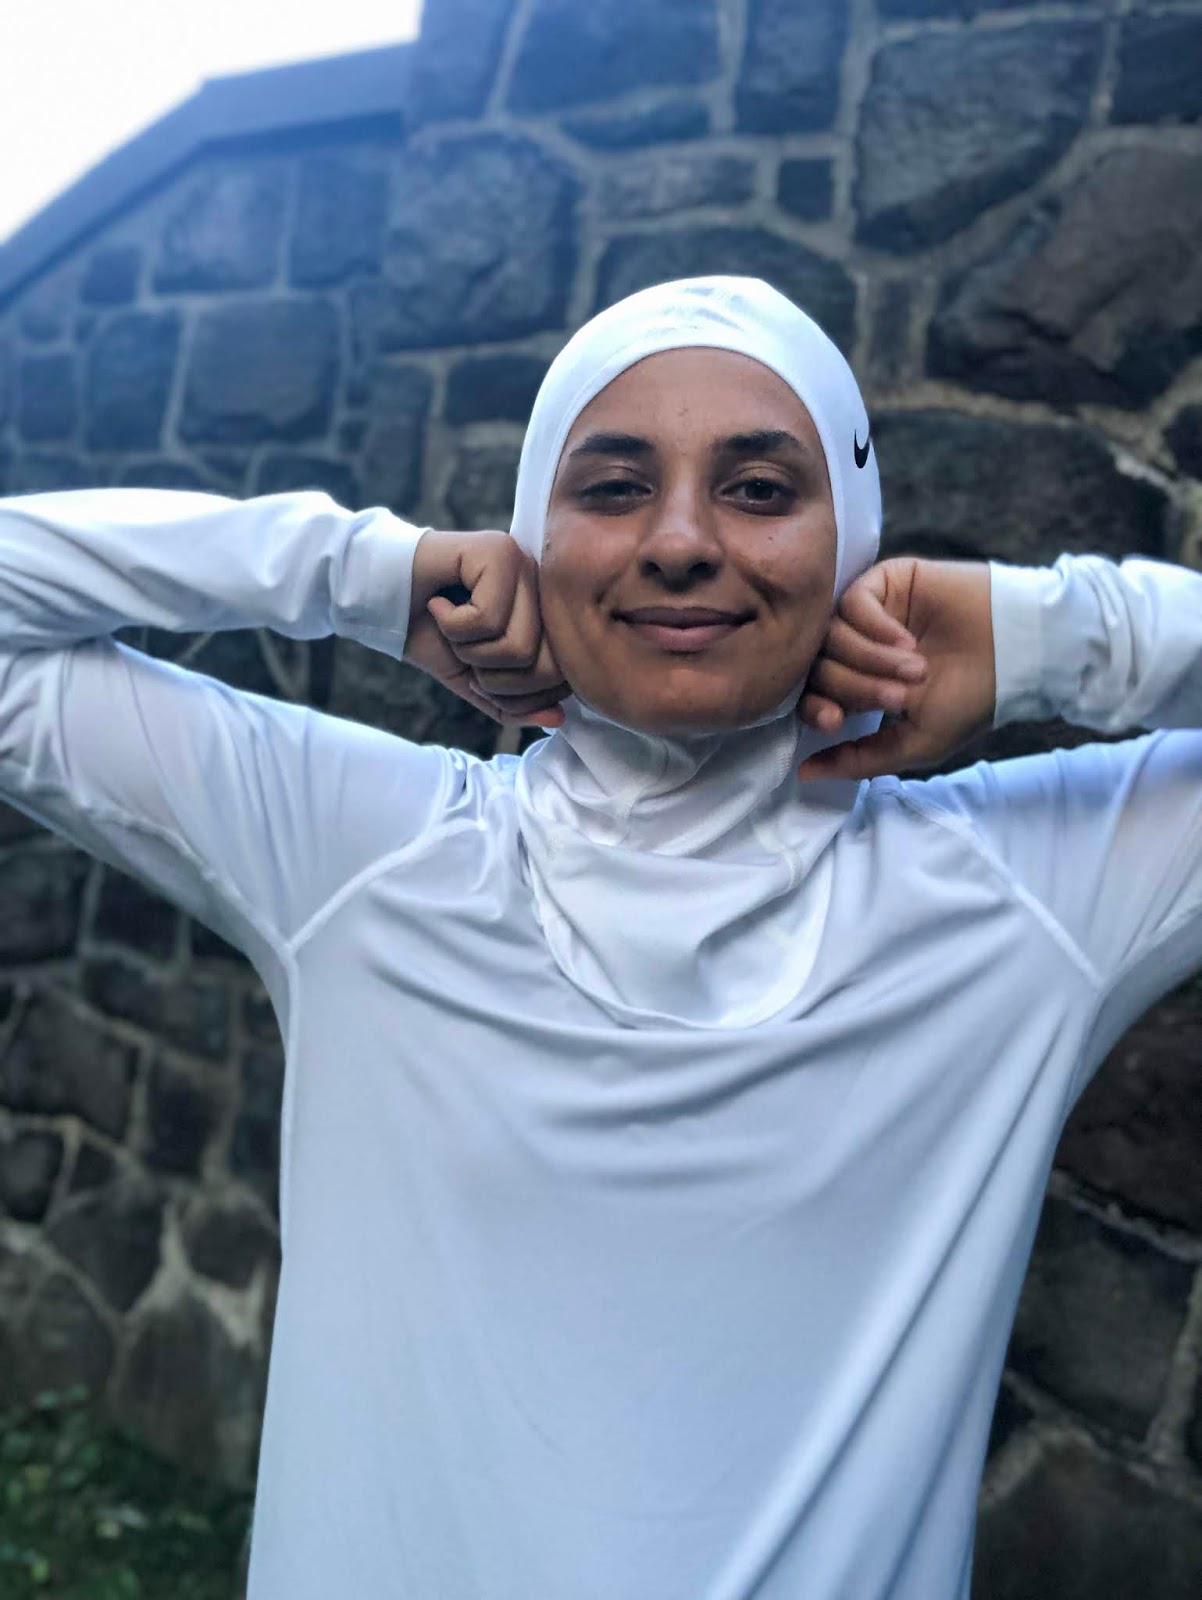 Sahara with Nike Hijab, athletic clothes